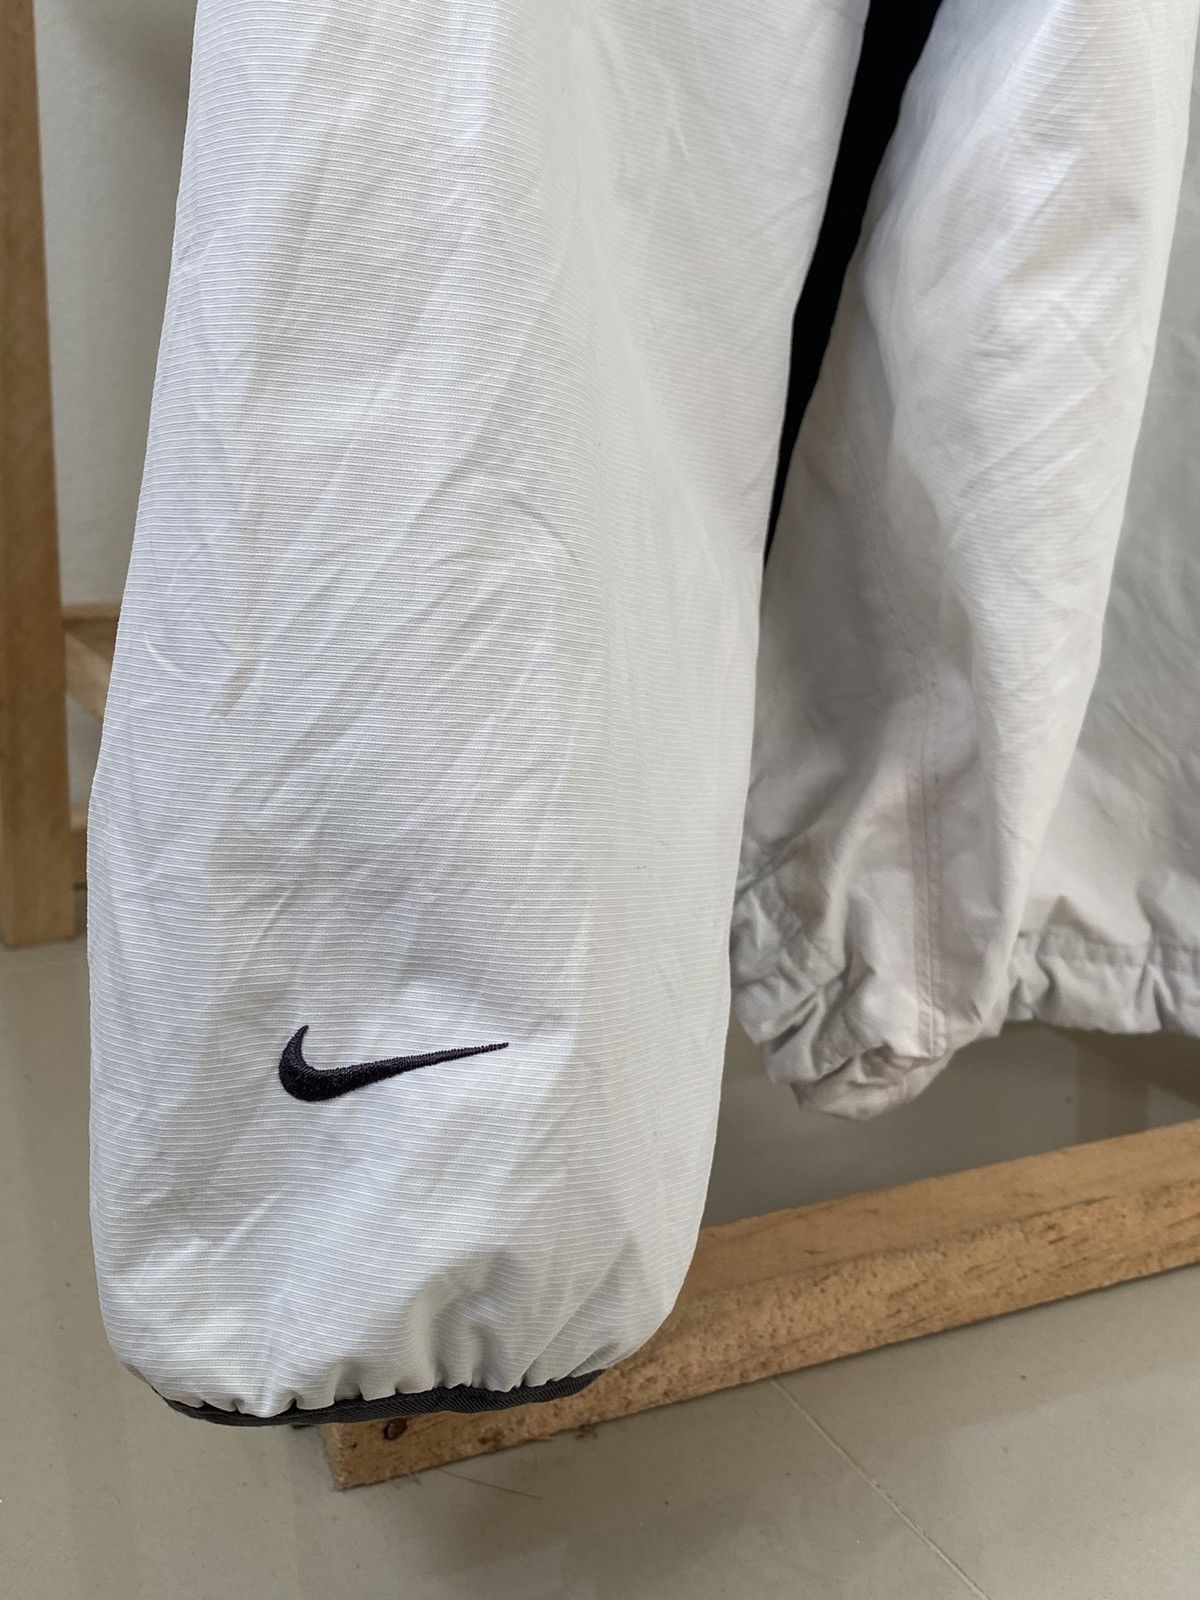 Nike Vintage Nike Shox Anorak Jacket Size US XL / EU 56 / 4 - 12 Thumbnail